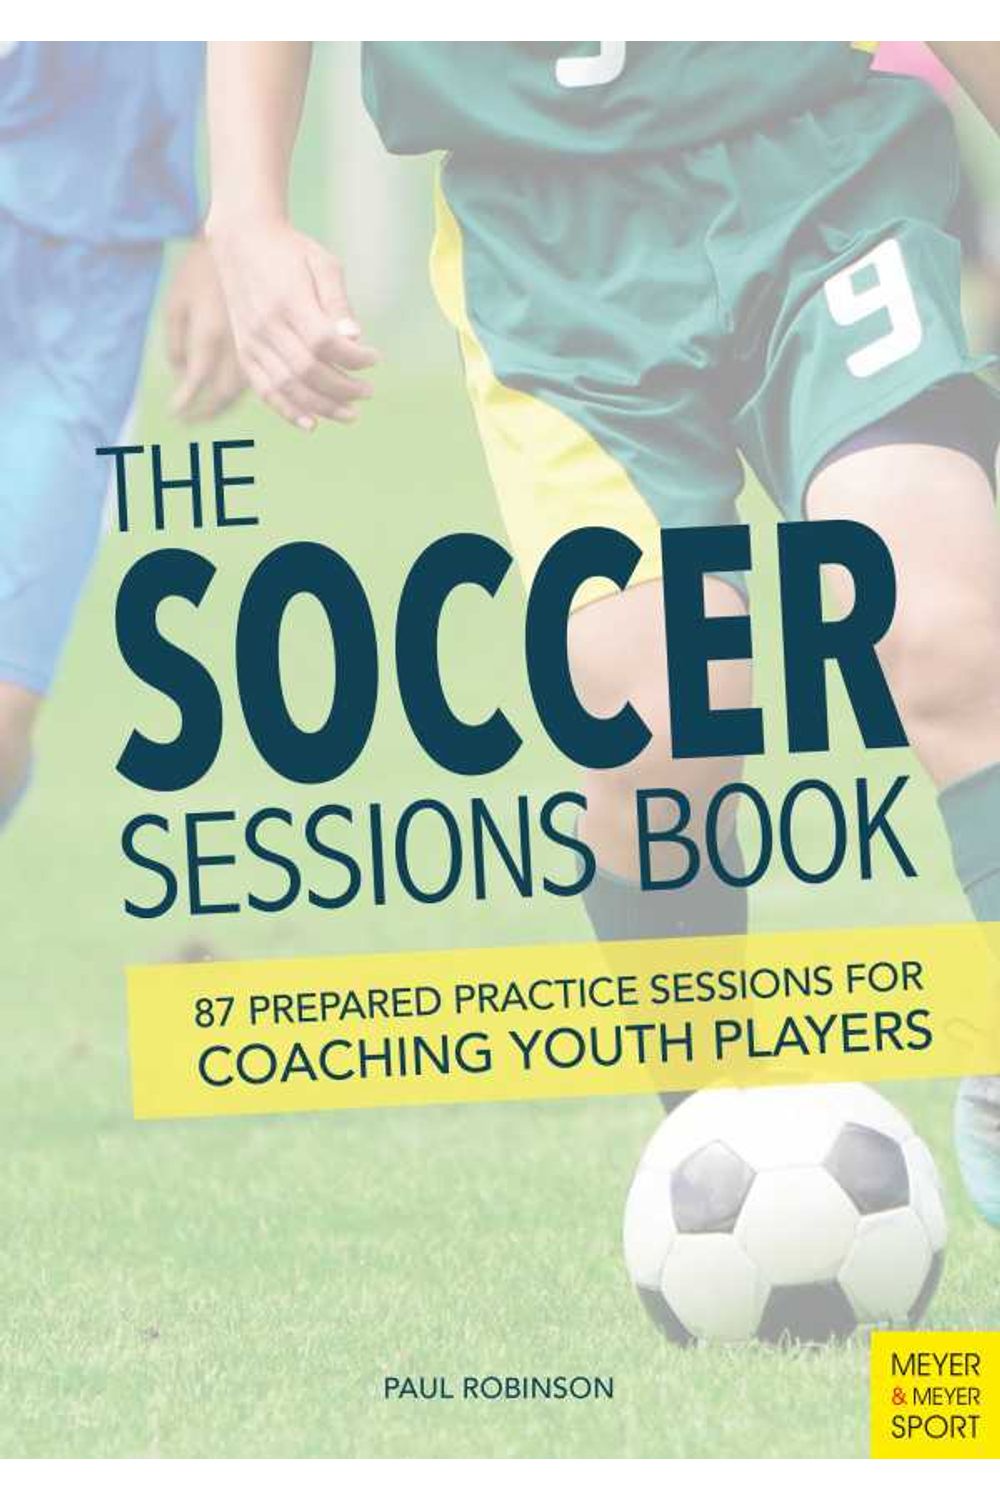 bw-the-soccer-sessions-book-meyer-meyer-sport-9781782555070